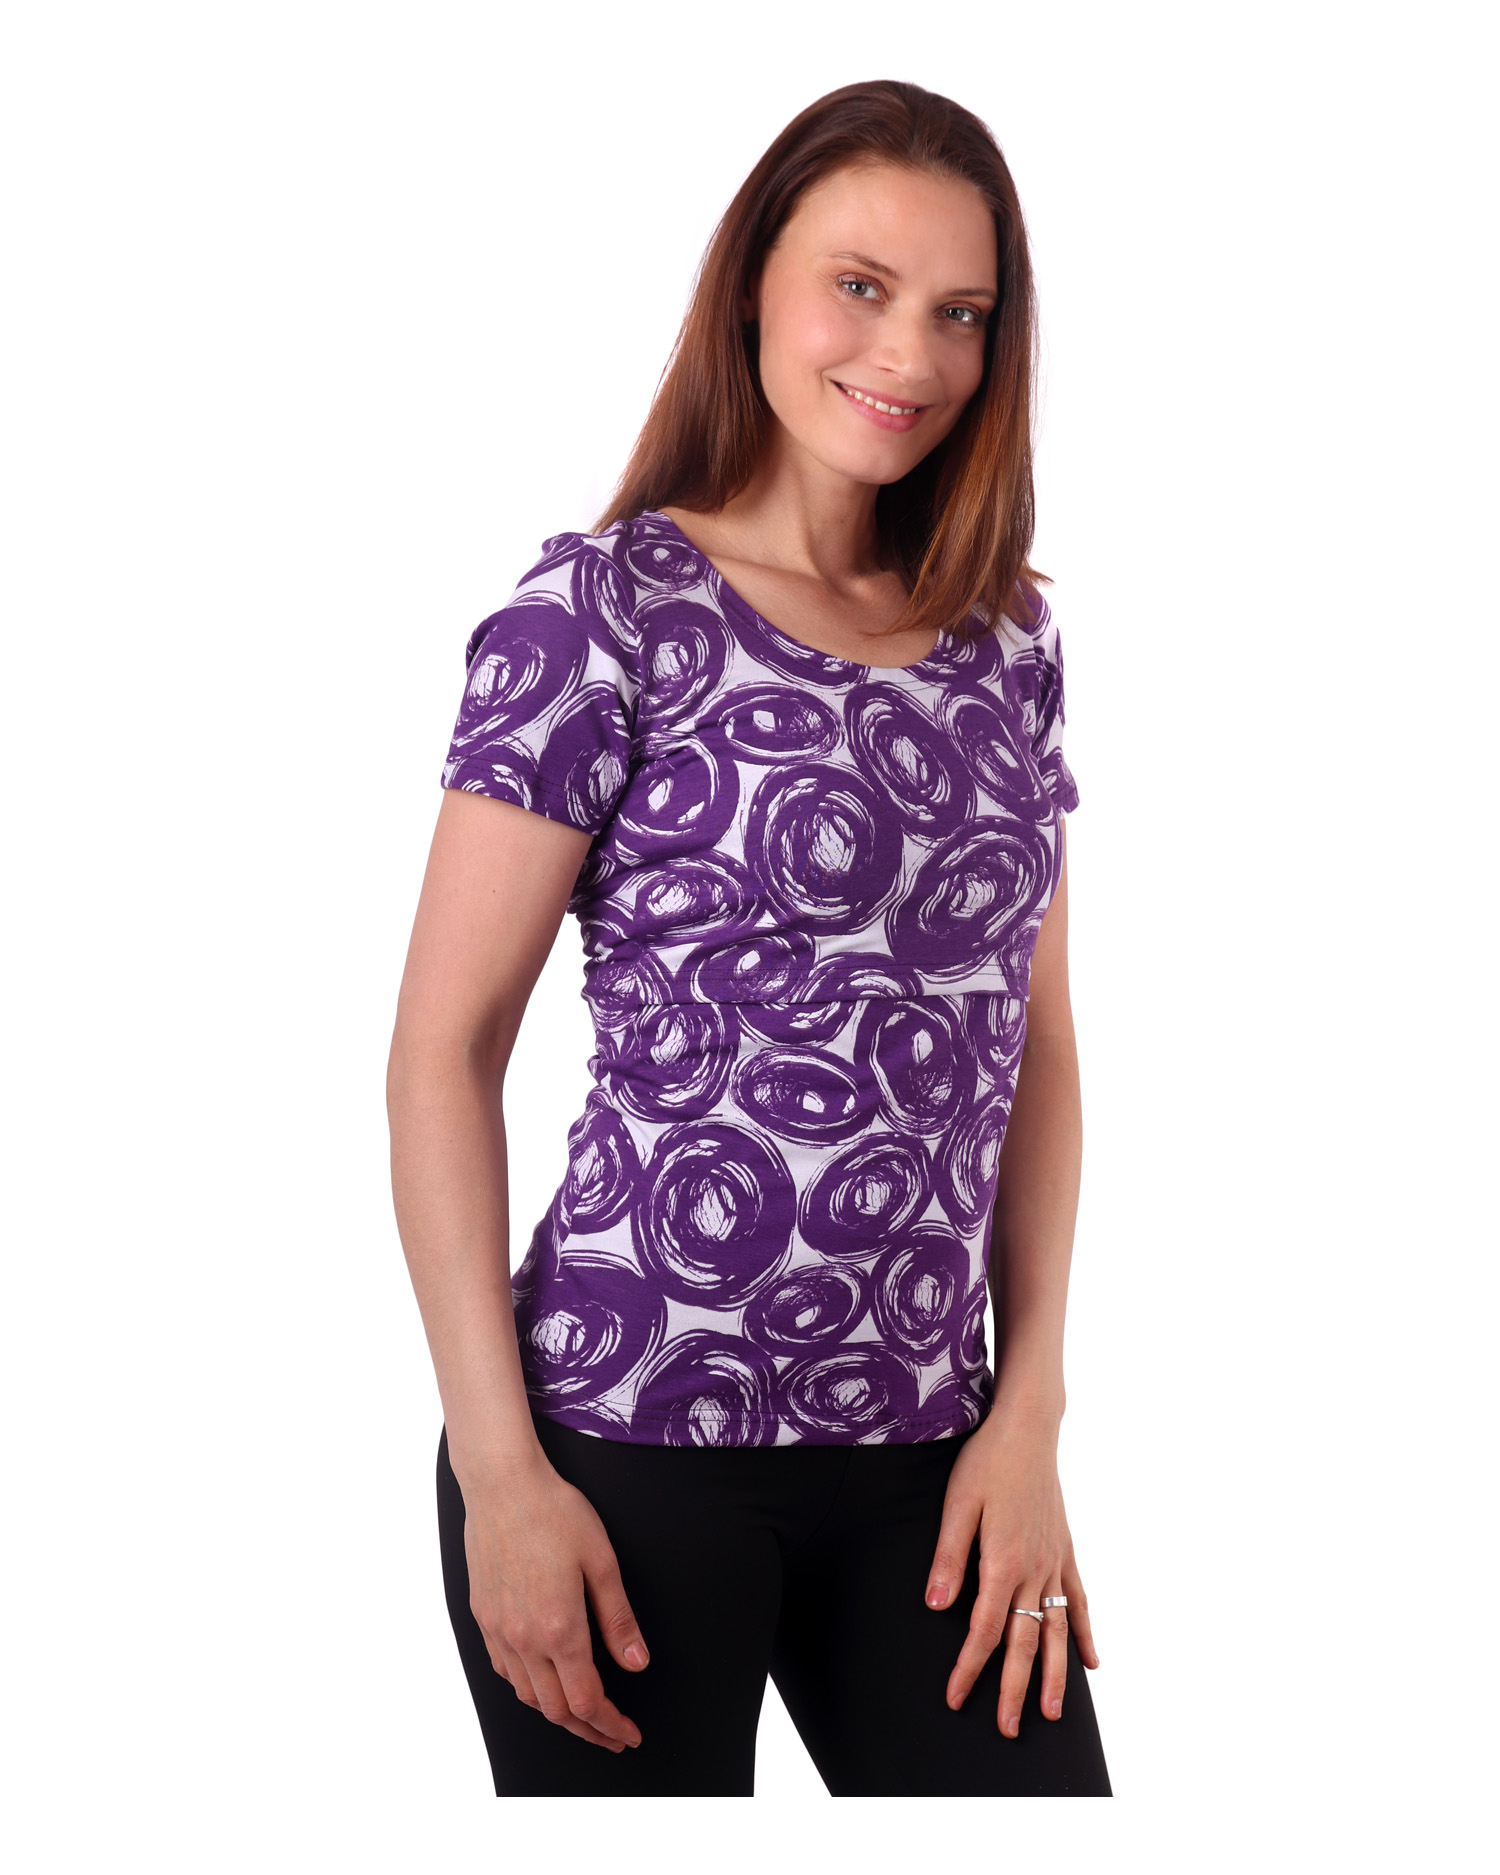 Breast-feeding T-shirt Katerina, short sleeves, purple pattern